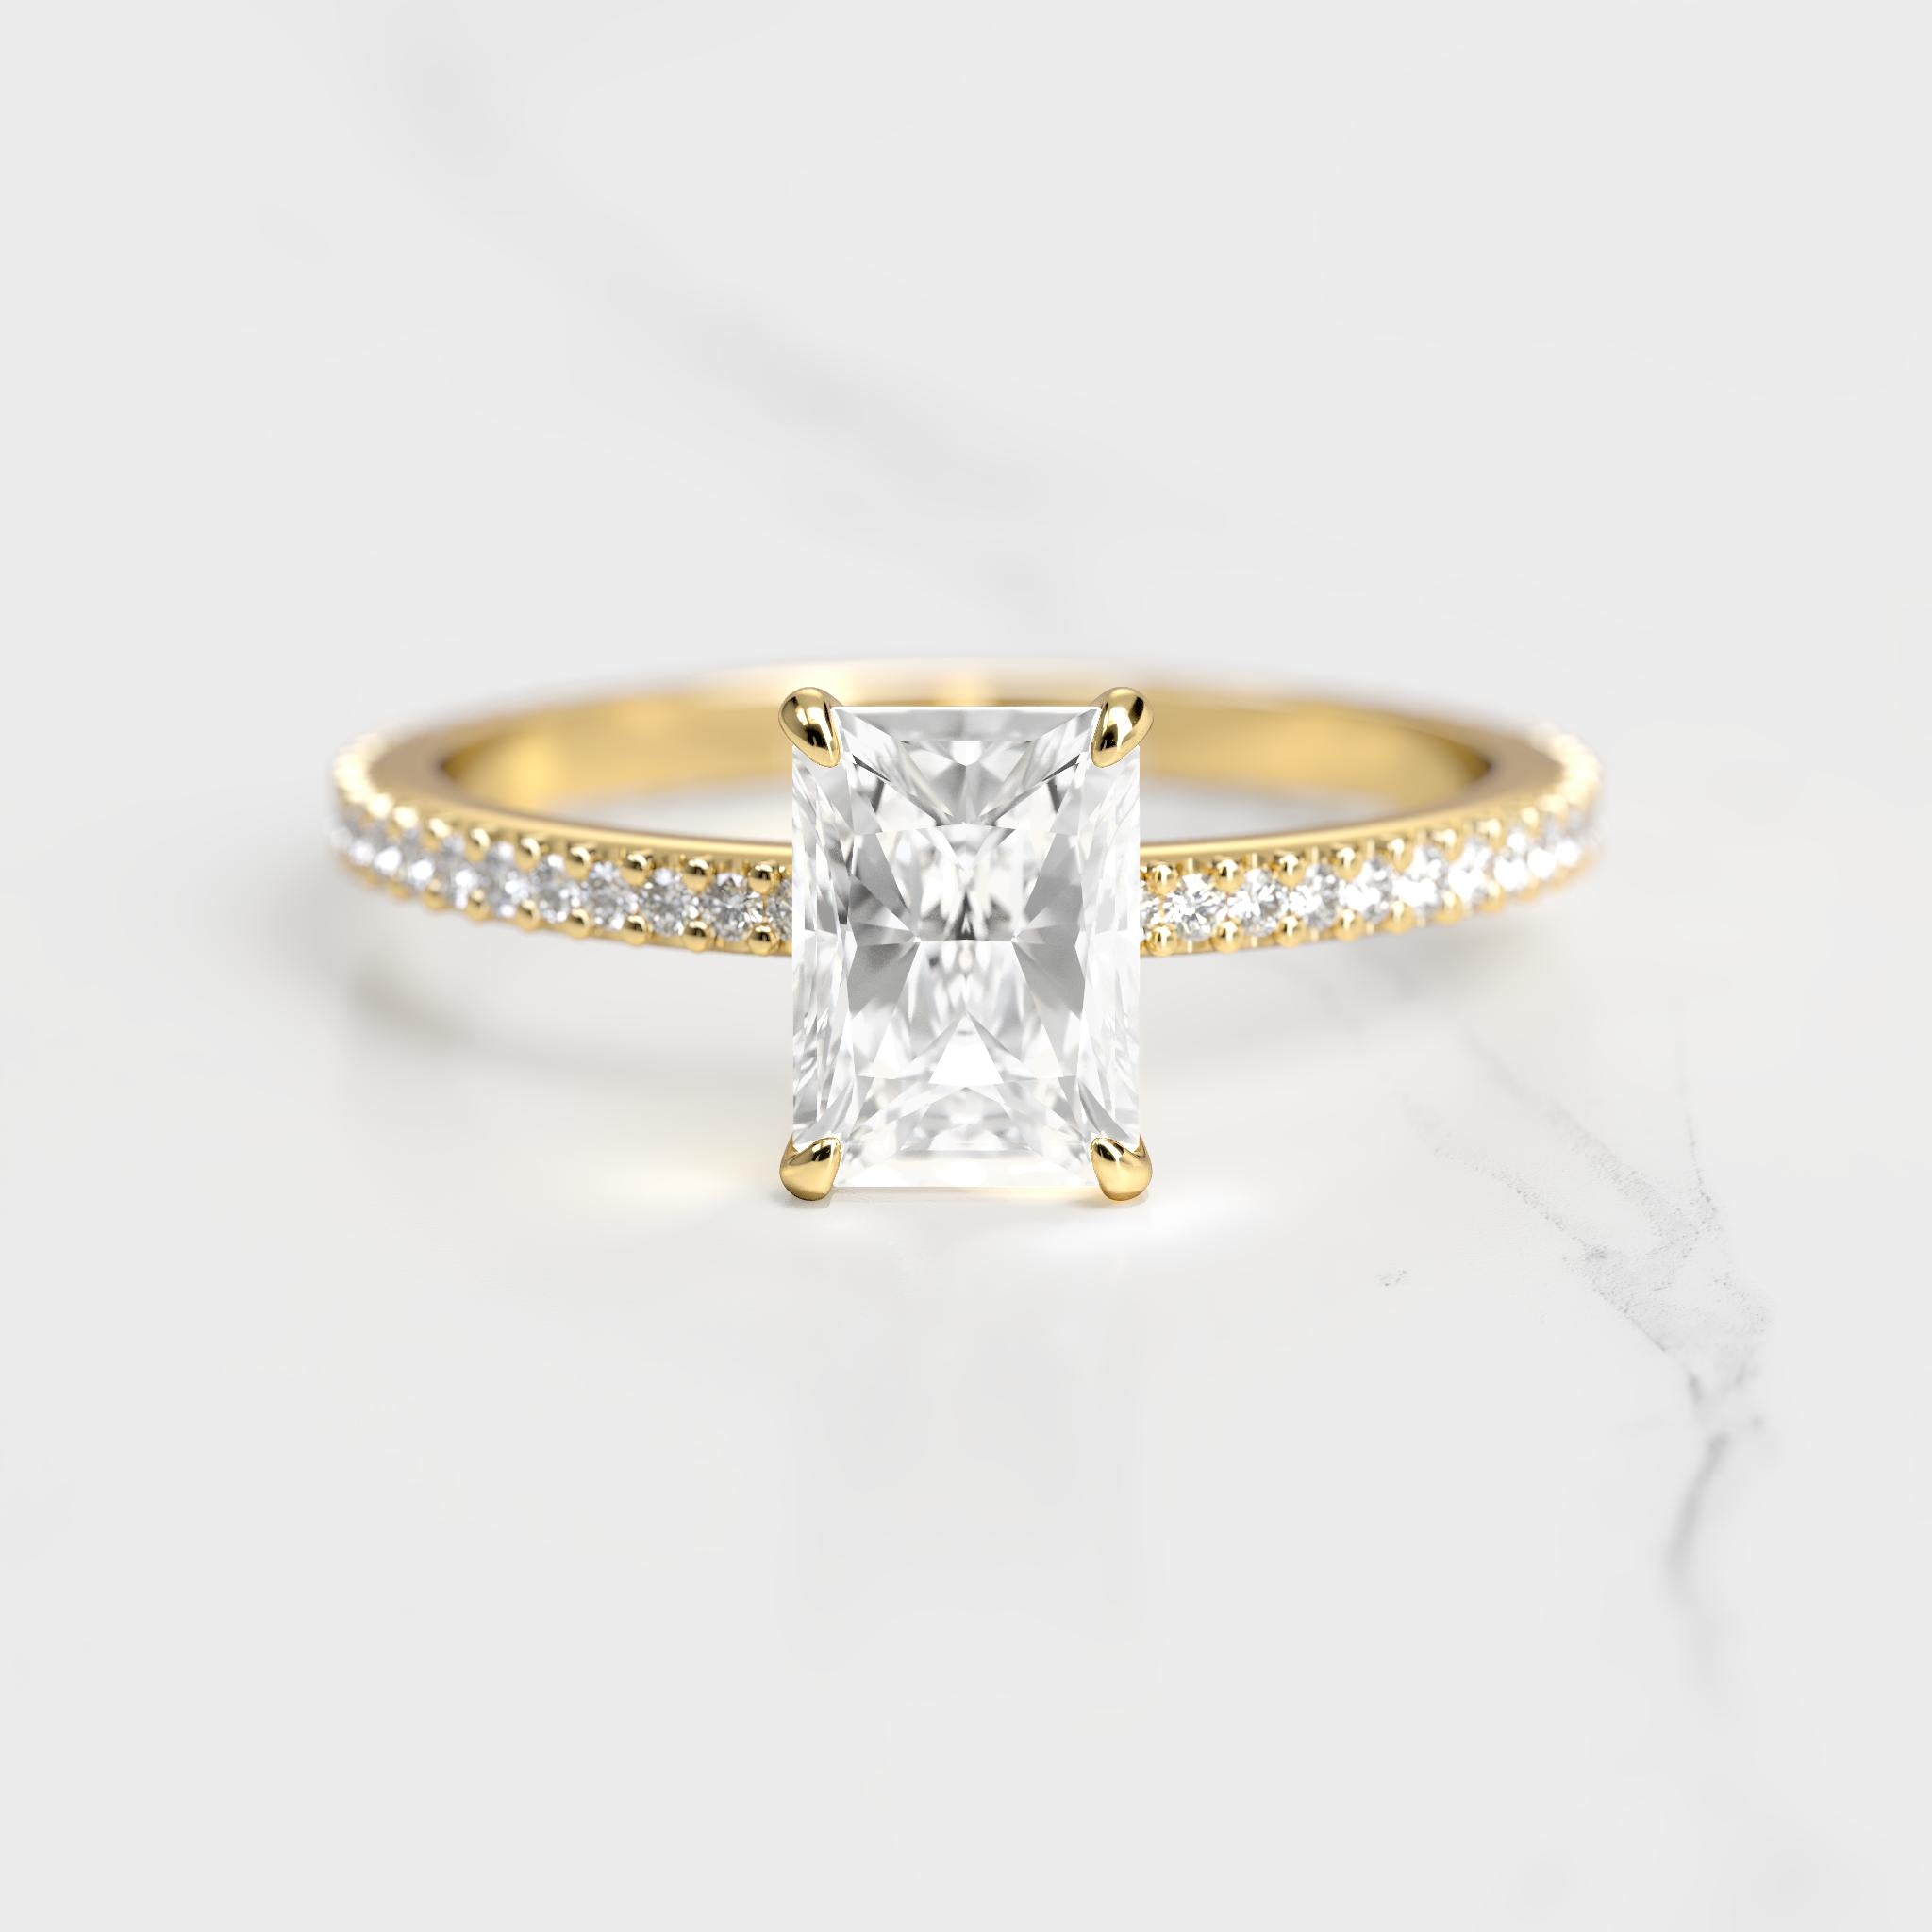 Radiant Half Pave Tapered Diamond Ring - 14k yellow gold / 1ct / lab diamond